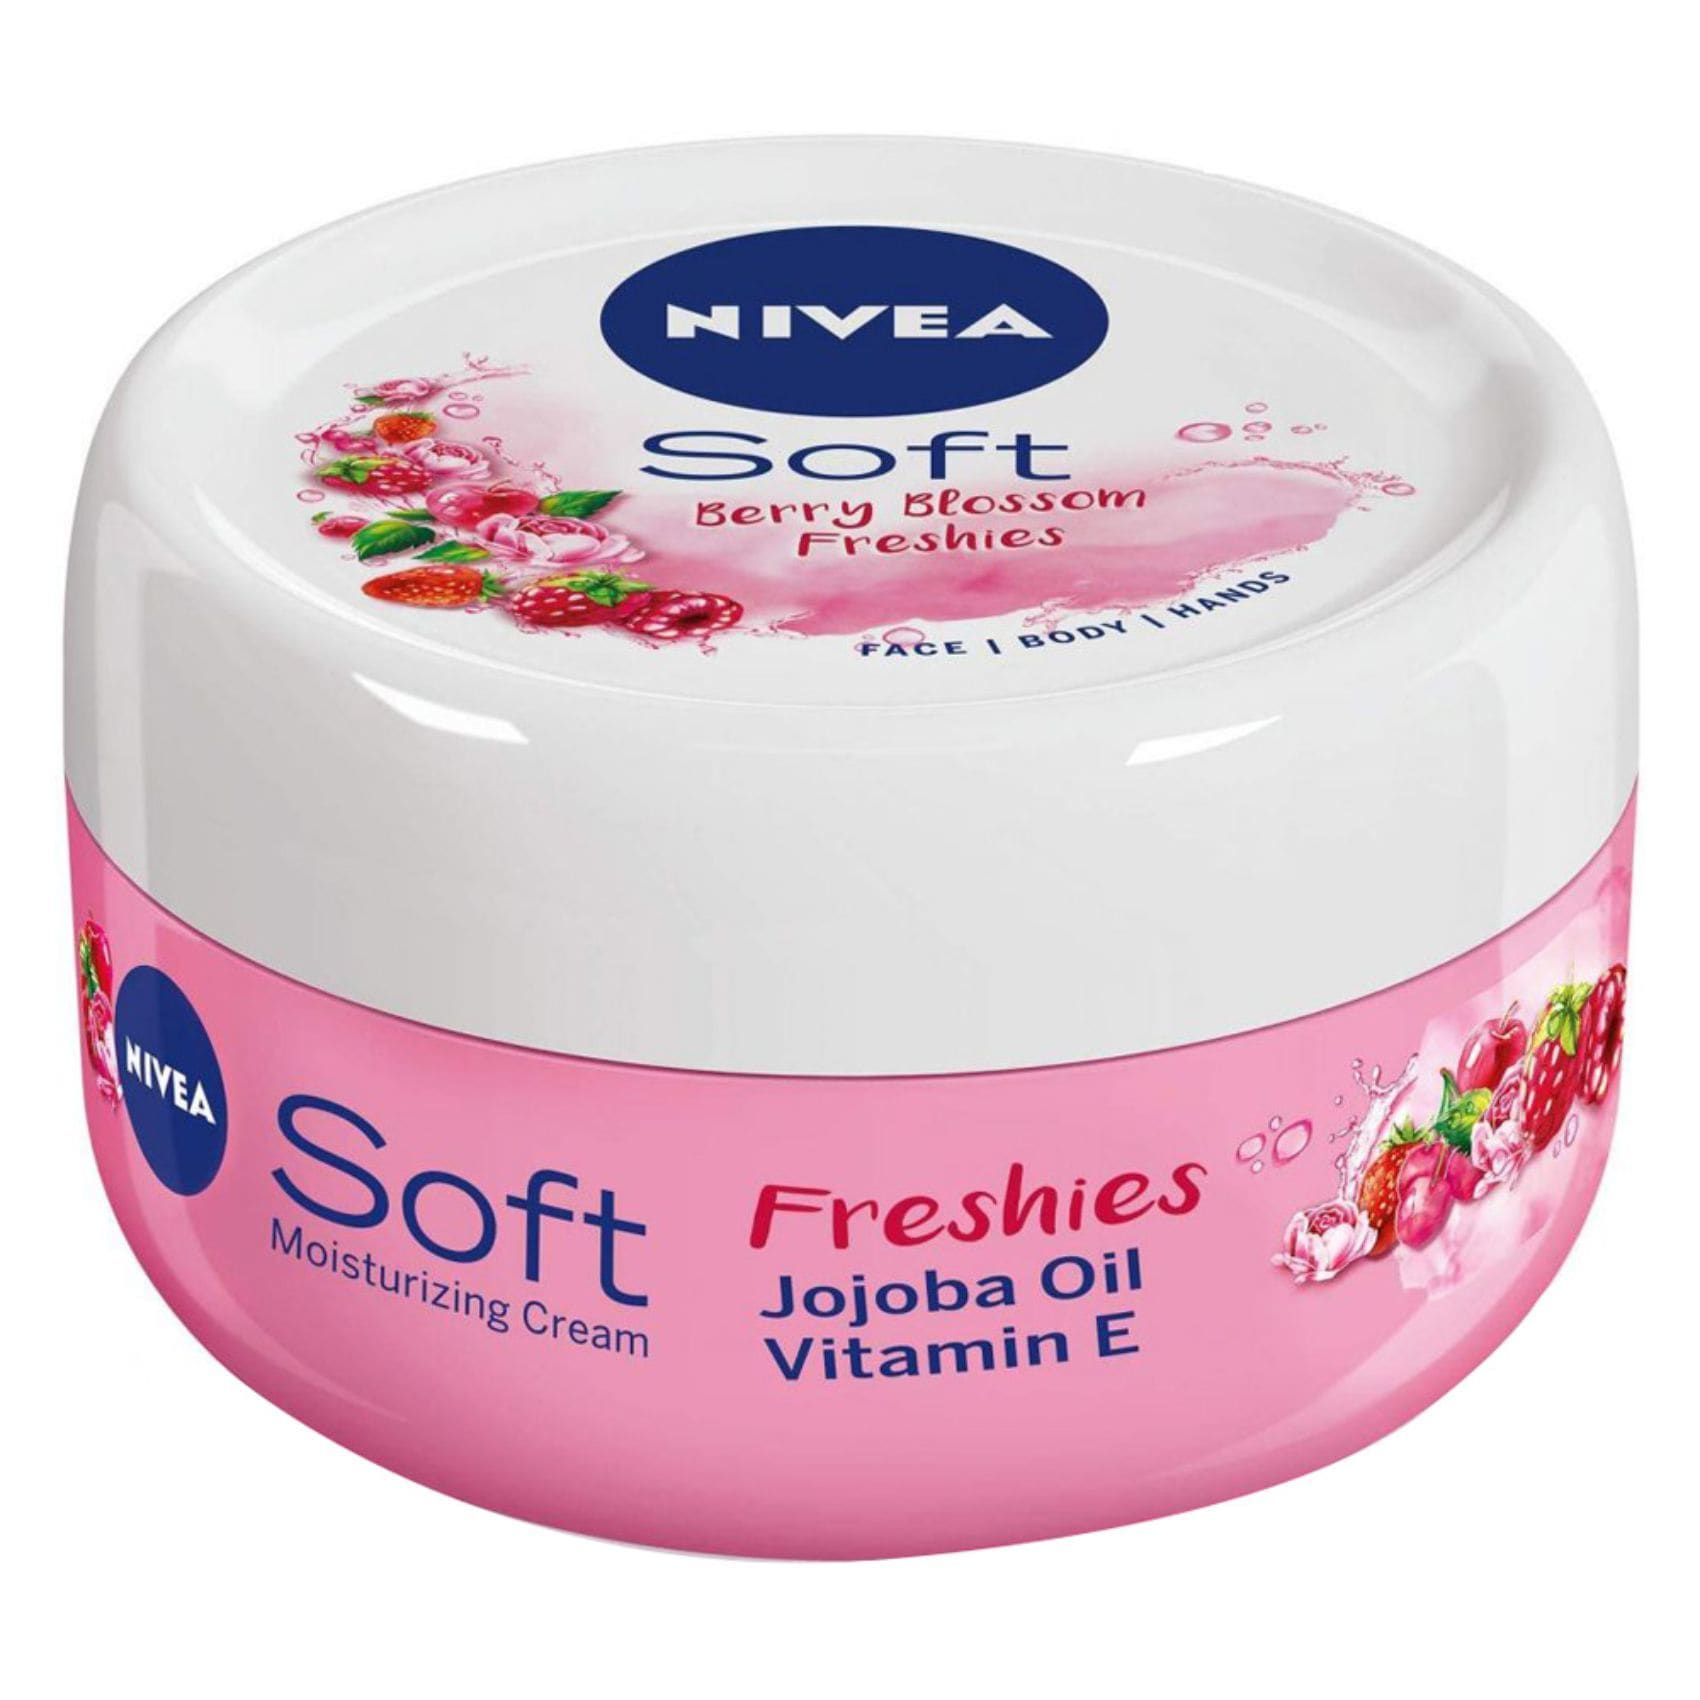 Jojoba Oil Vitamin E Moisturizing Cream 100ml Online - Shop Beauty & Care on Carrefour UAE